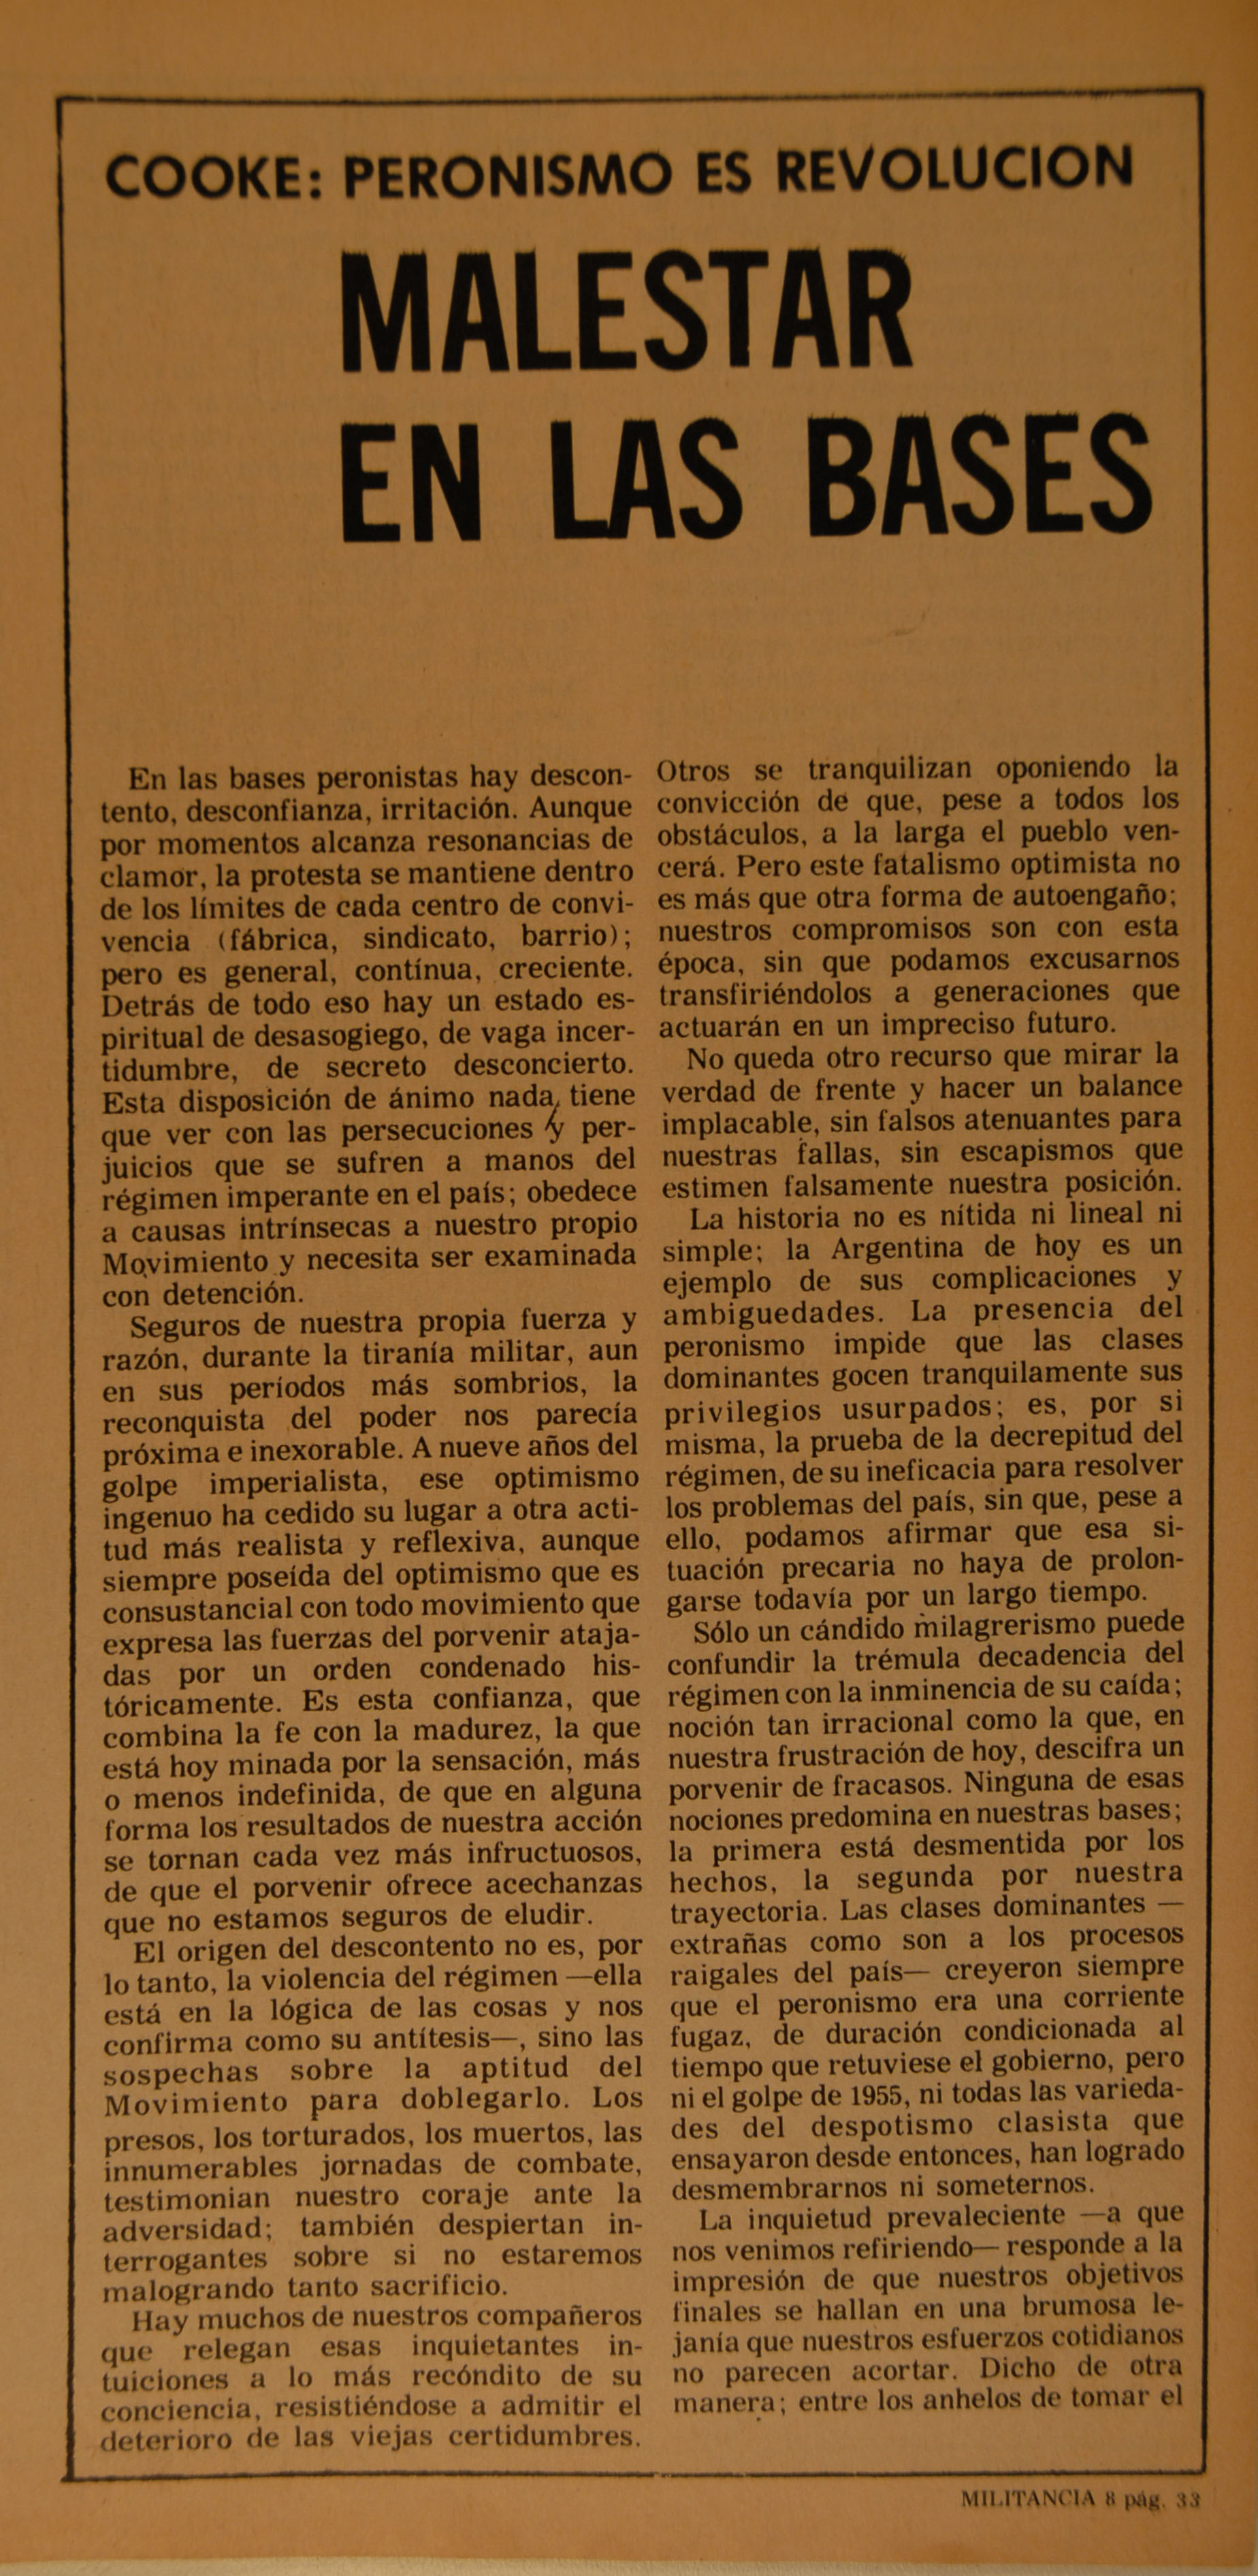 Nota en Militancia, agosto 1973. Peronismo es revolución, J.W. Cooke